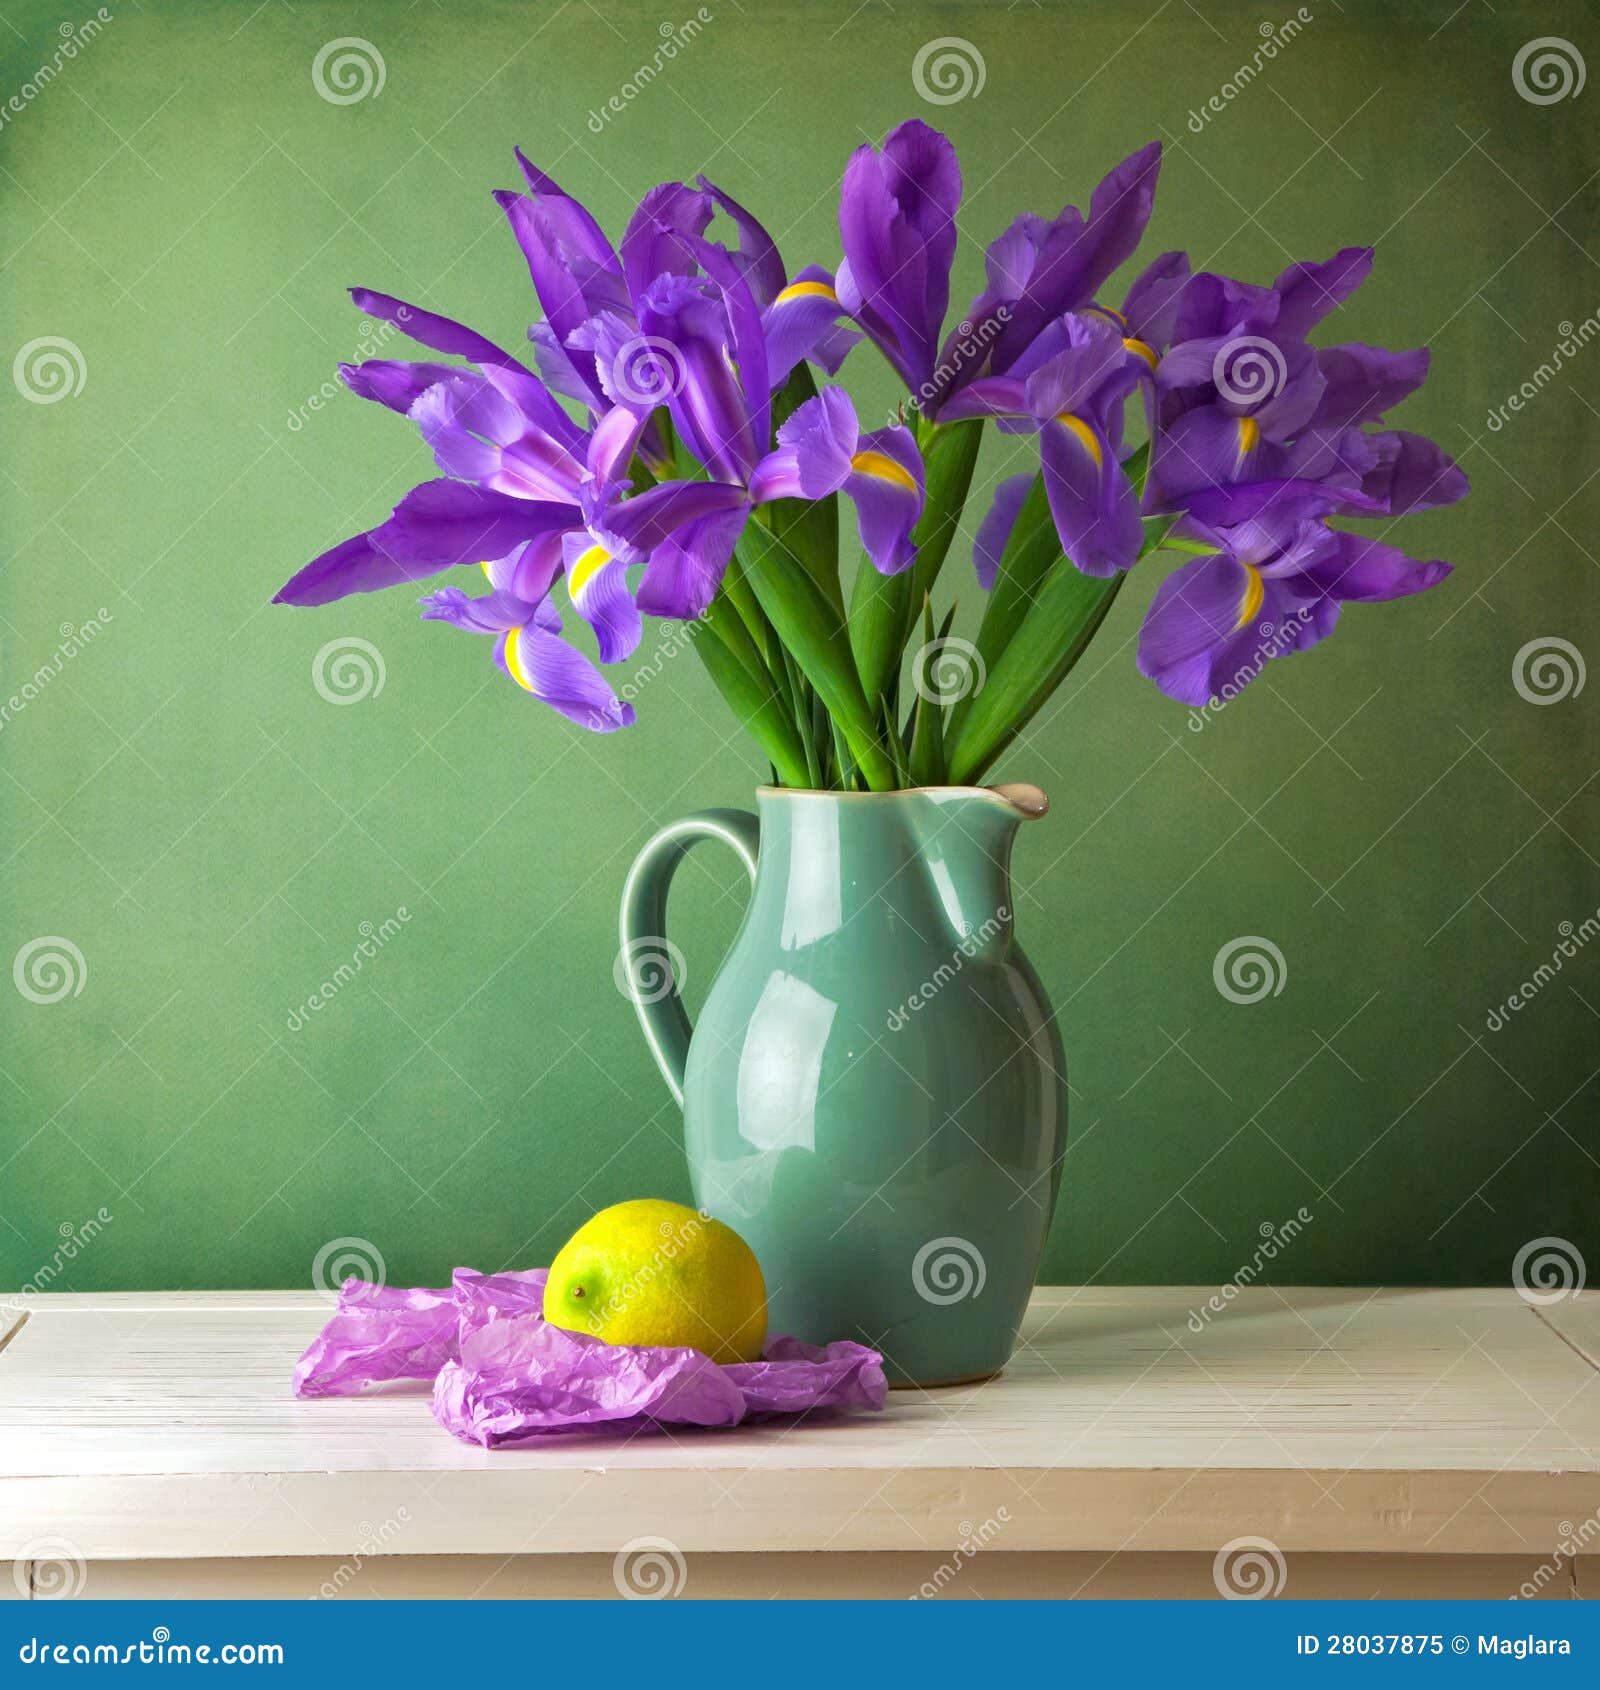 beautiful still life with iris flower